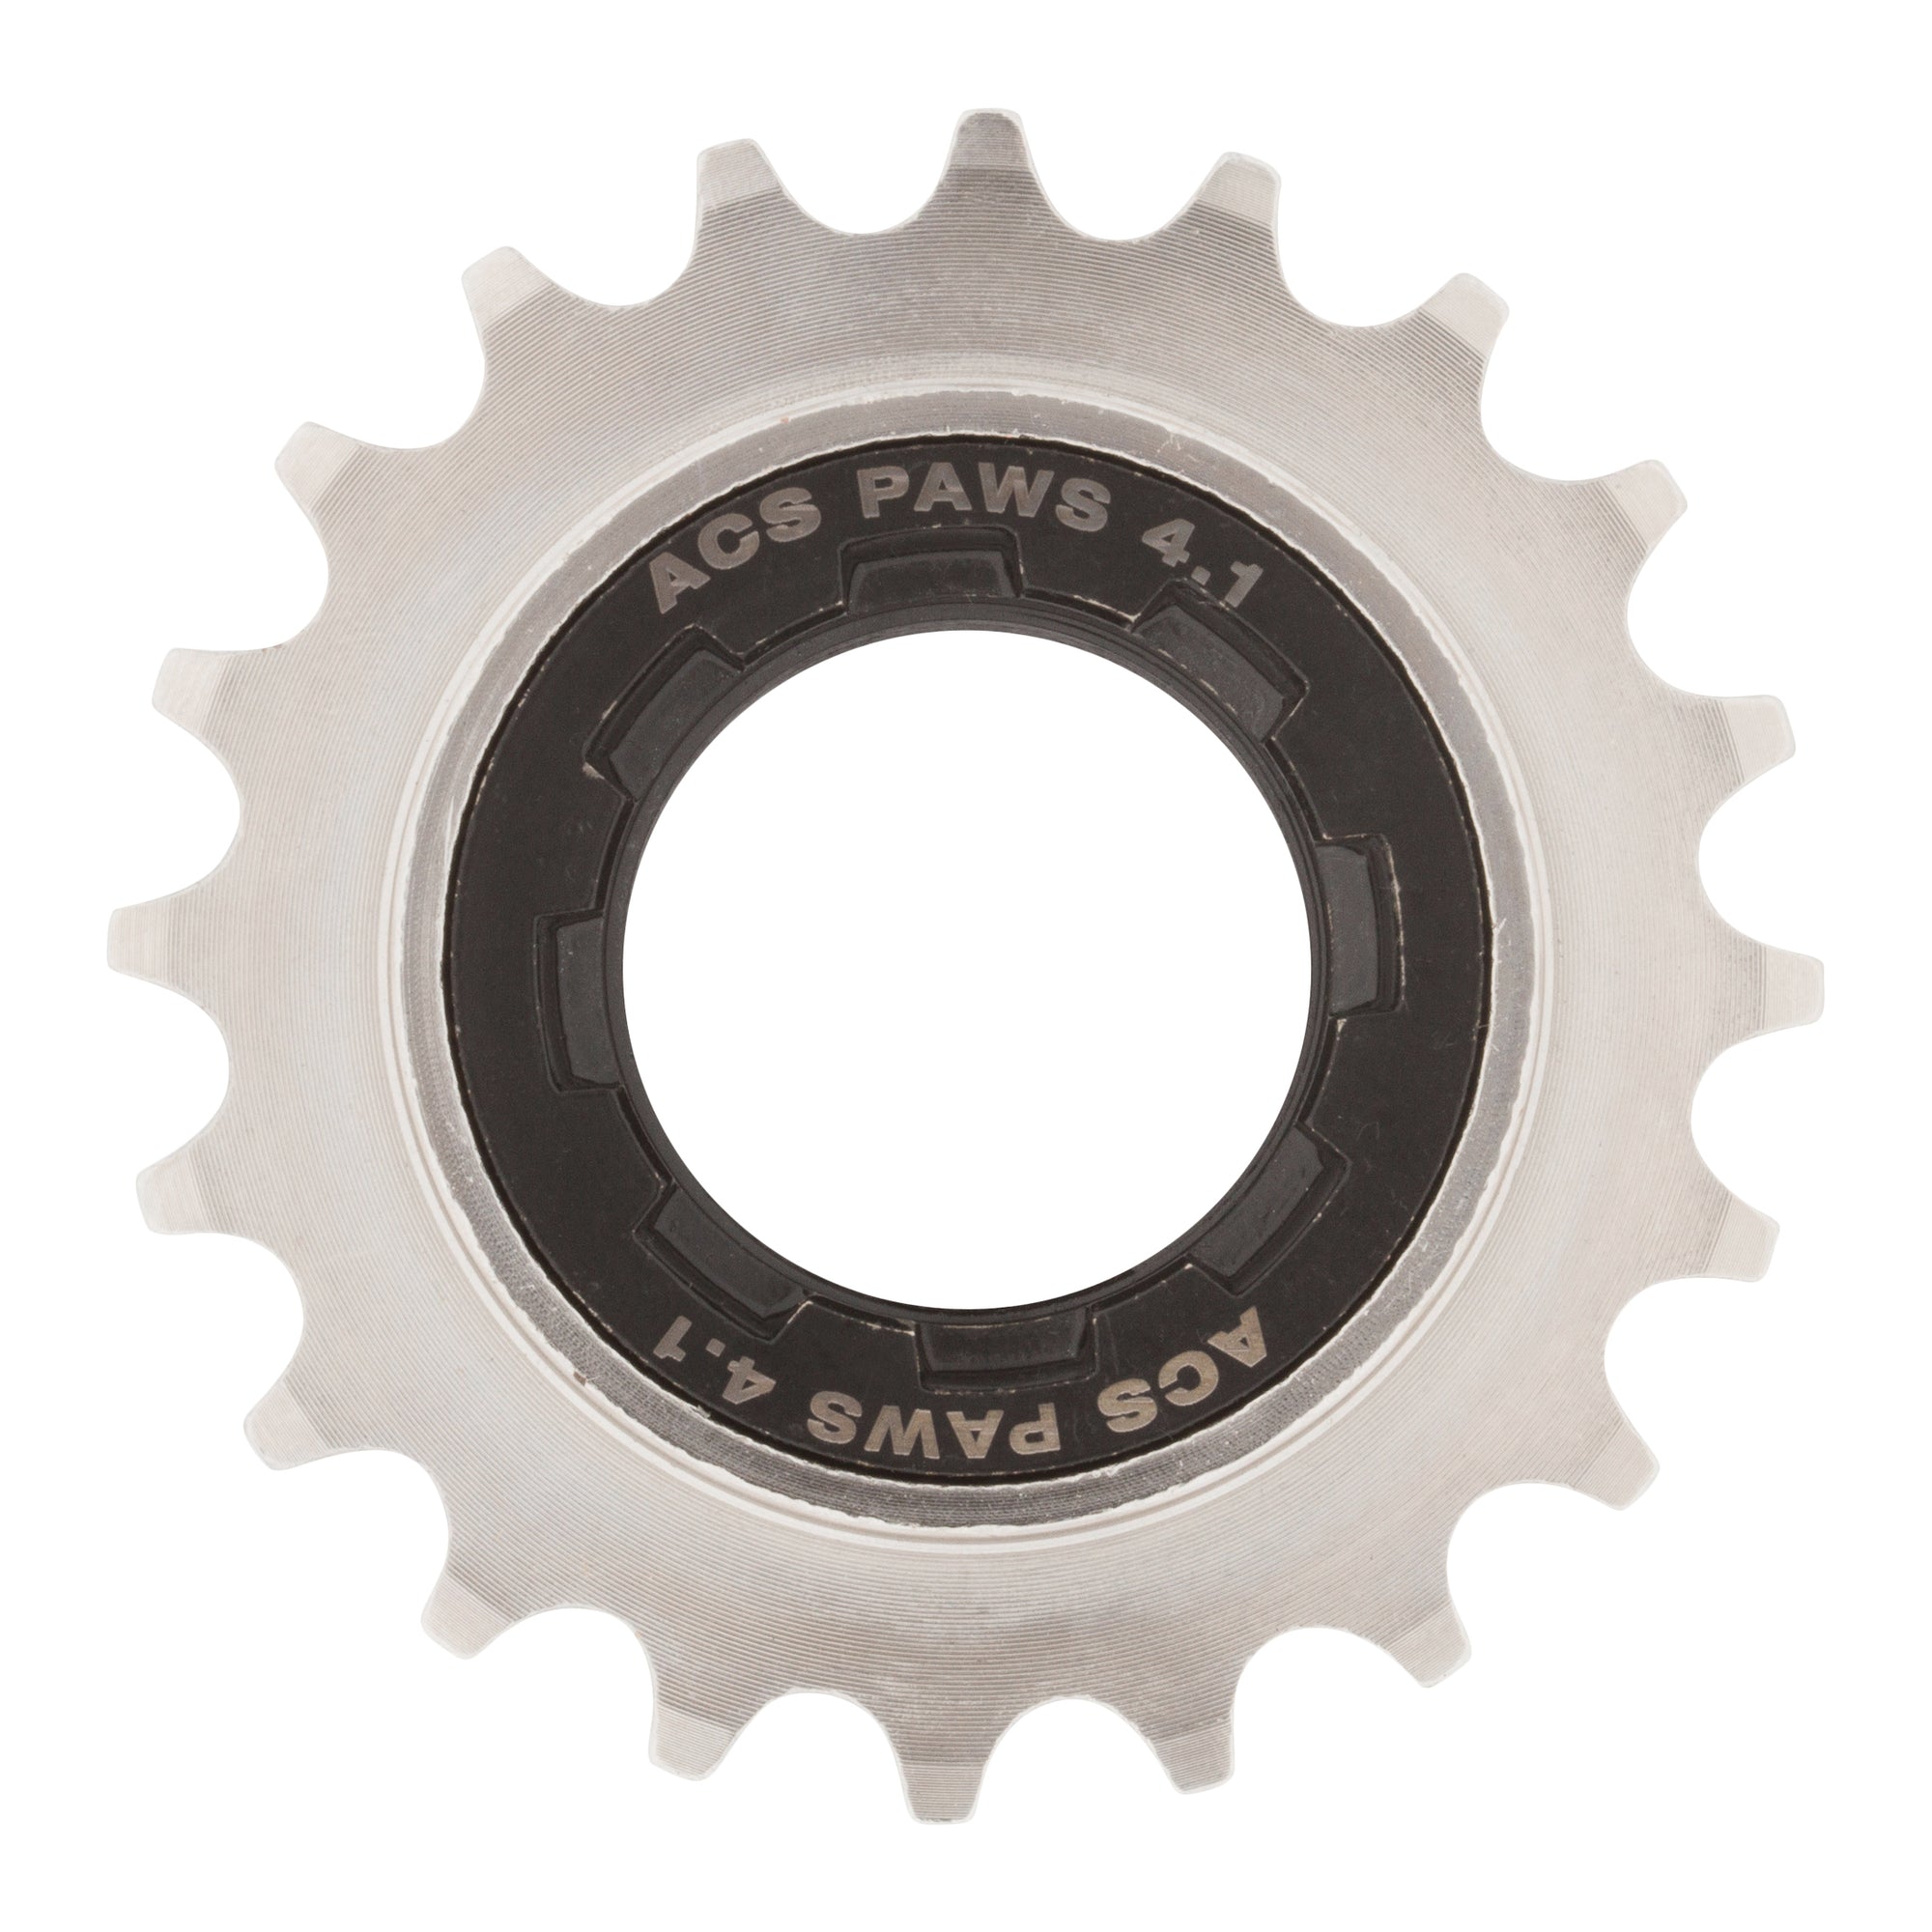 ACS Paws 4.1 20t BMX Freewheel - 1/8" & 3/32" - Black/Nickel